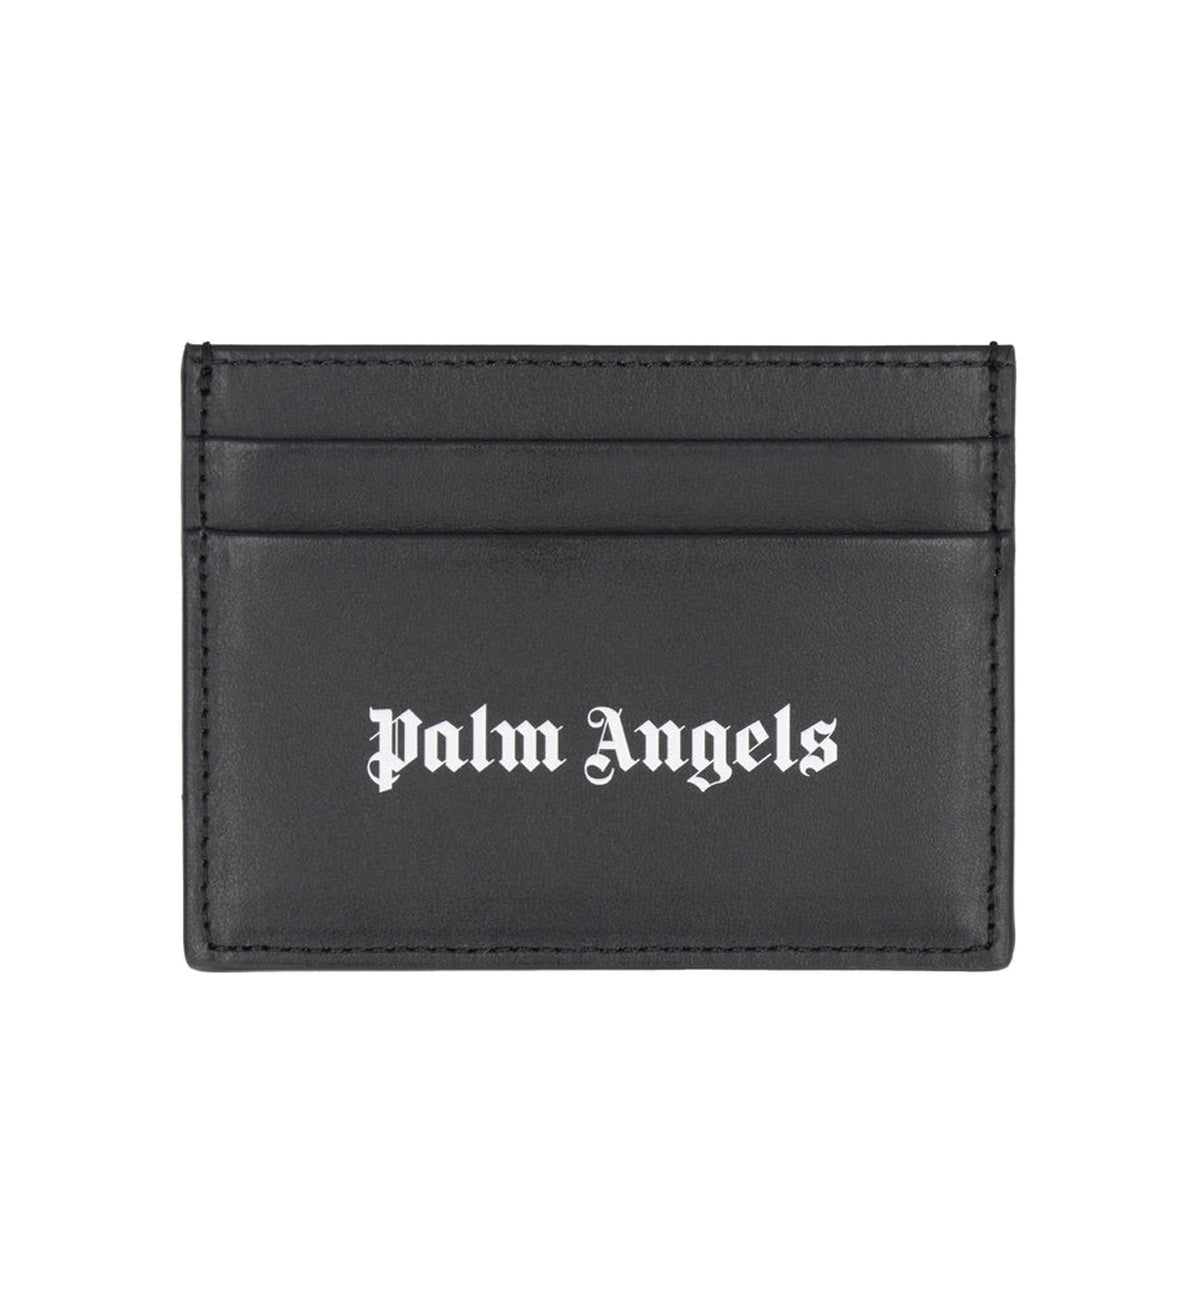 Palm Angels Leather Cardholder